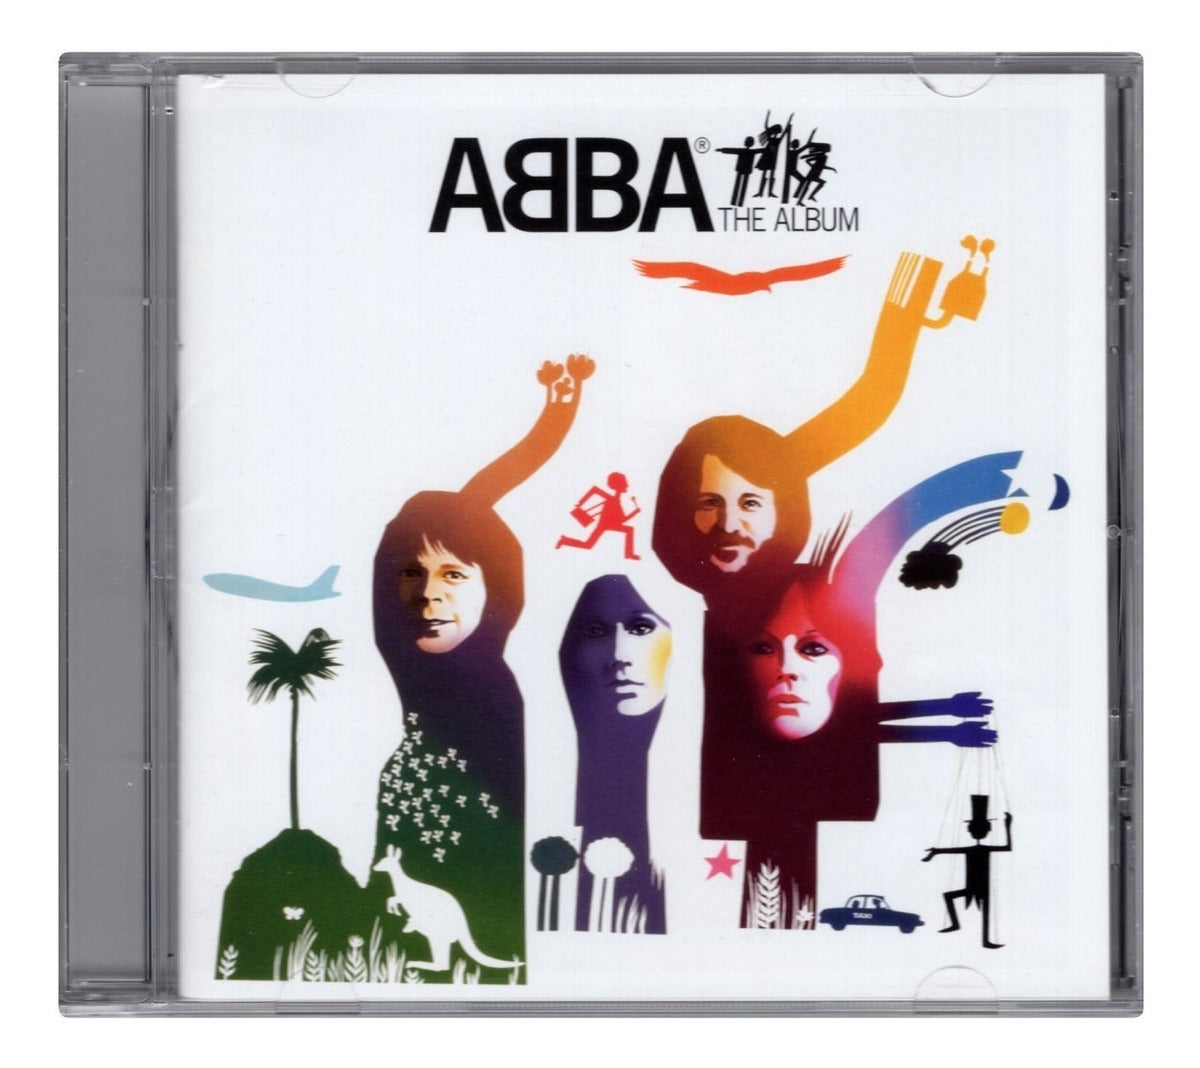 Abba The Album Disco Cd